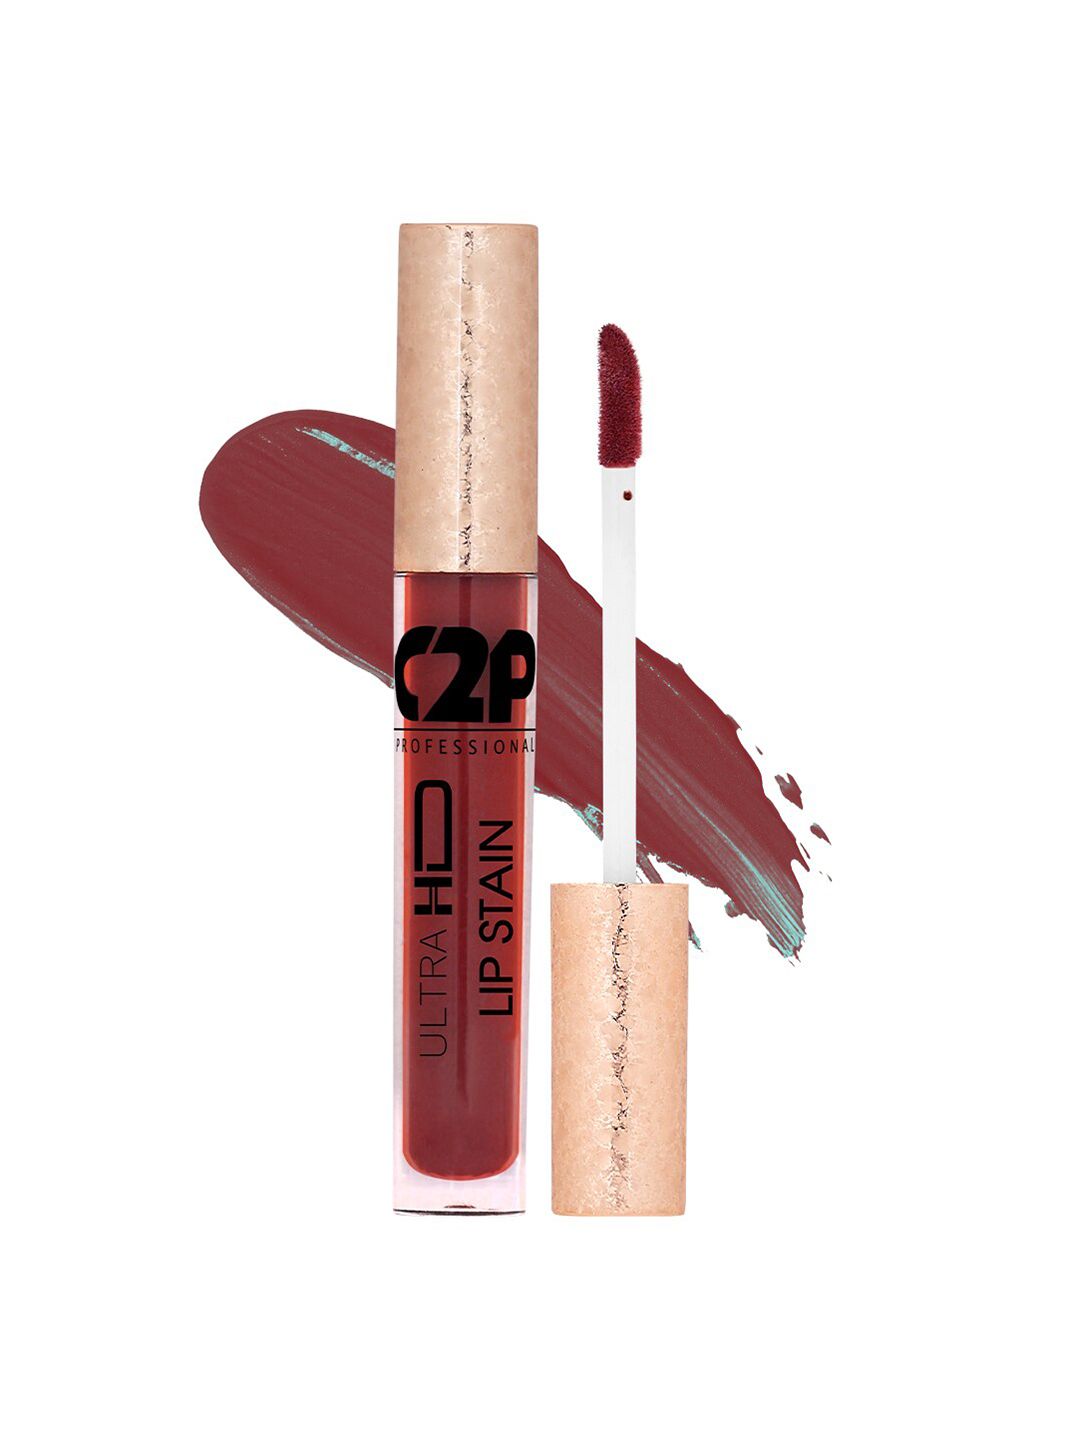 C2P PROFESSIONAL MAKEUP Lip Stain Liquid Lipstick - Congo Brown 33 5 ml Price in India